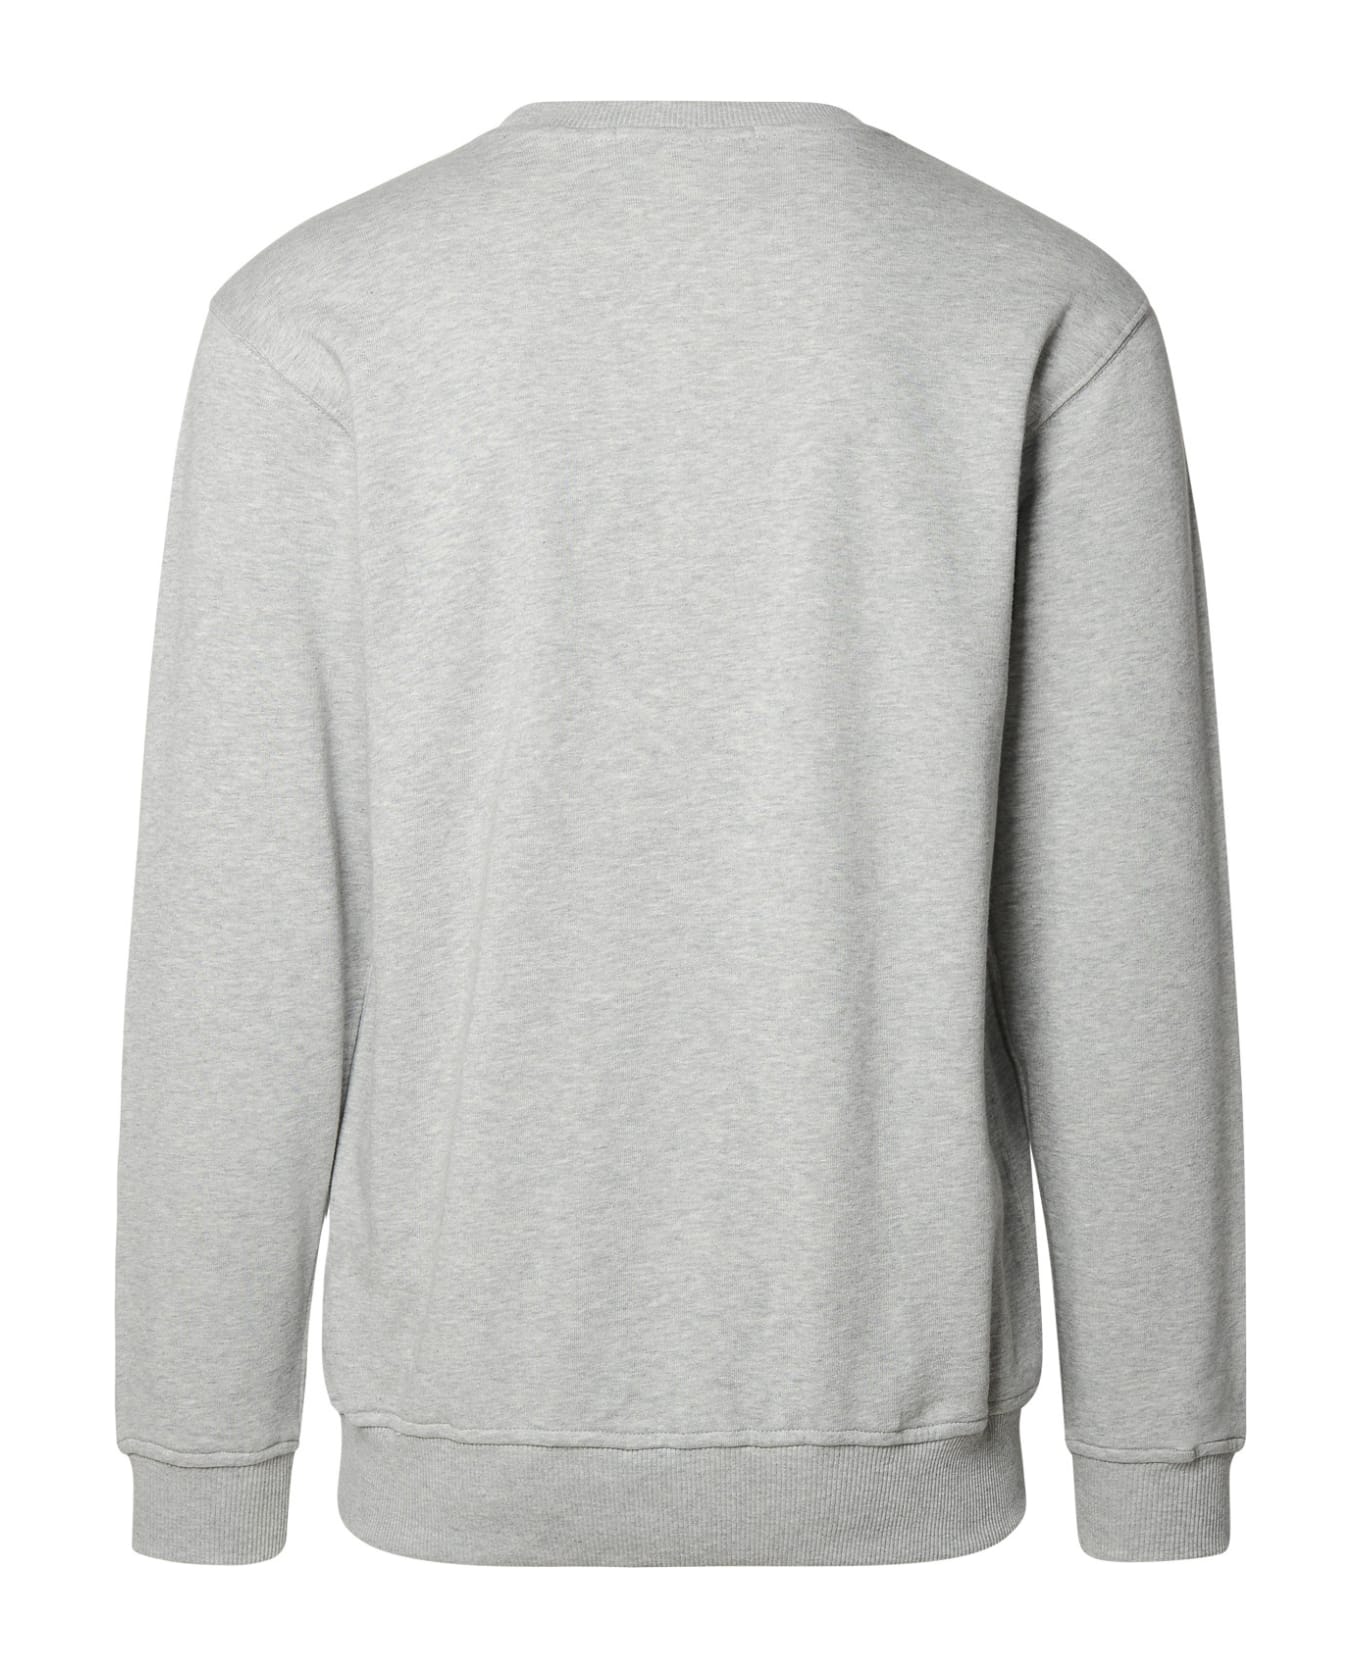 Comme des Garçons Shirt 'marilyn Monroe' Grey Cotton Sweatshirt - Grey